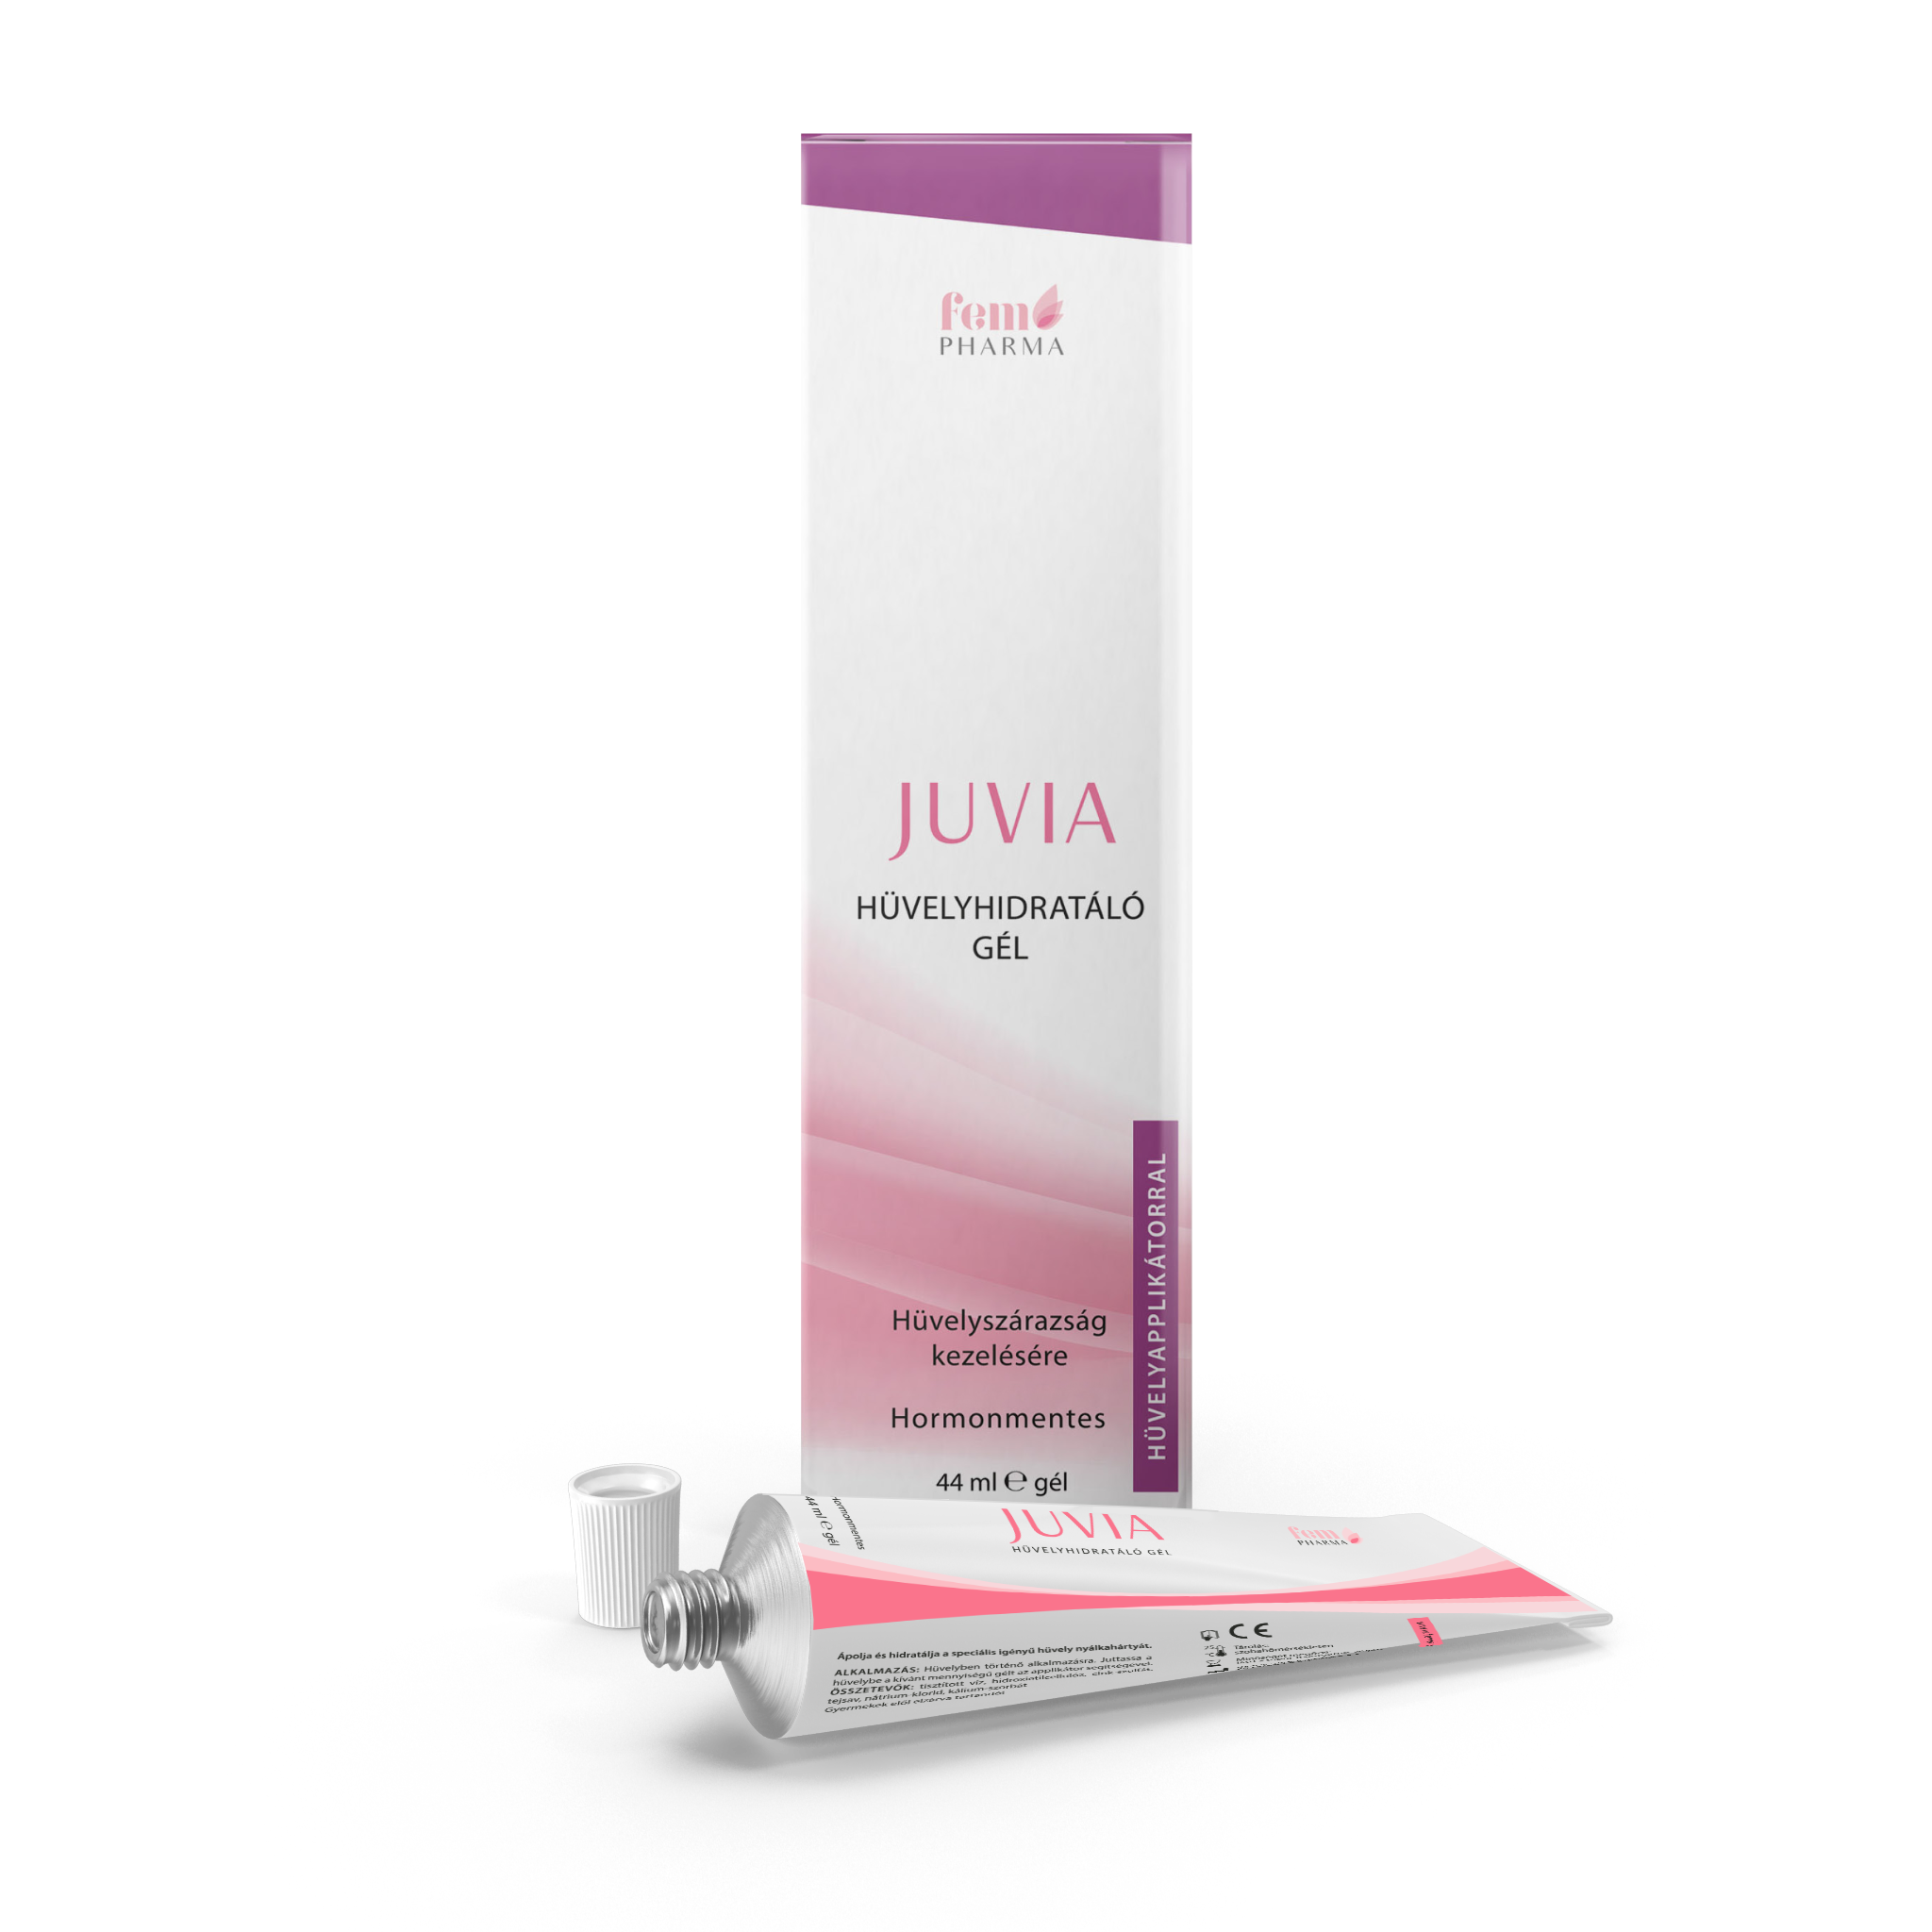 JUVIA – Vaginal moisturizing gel